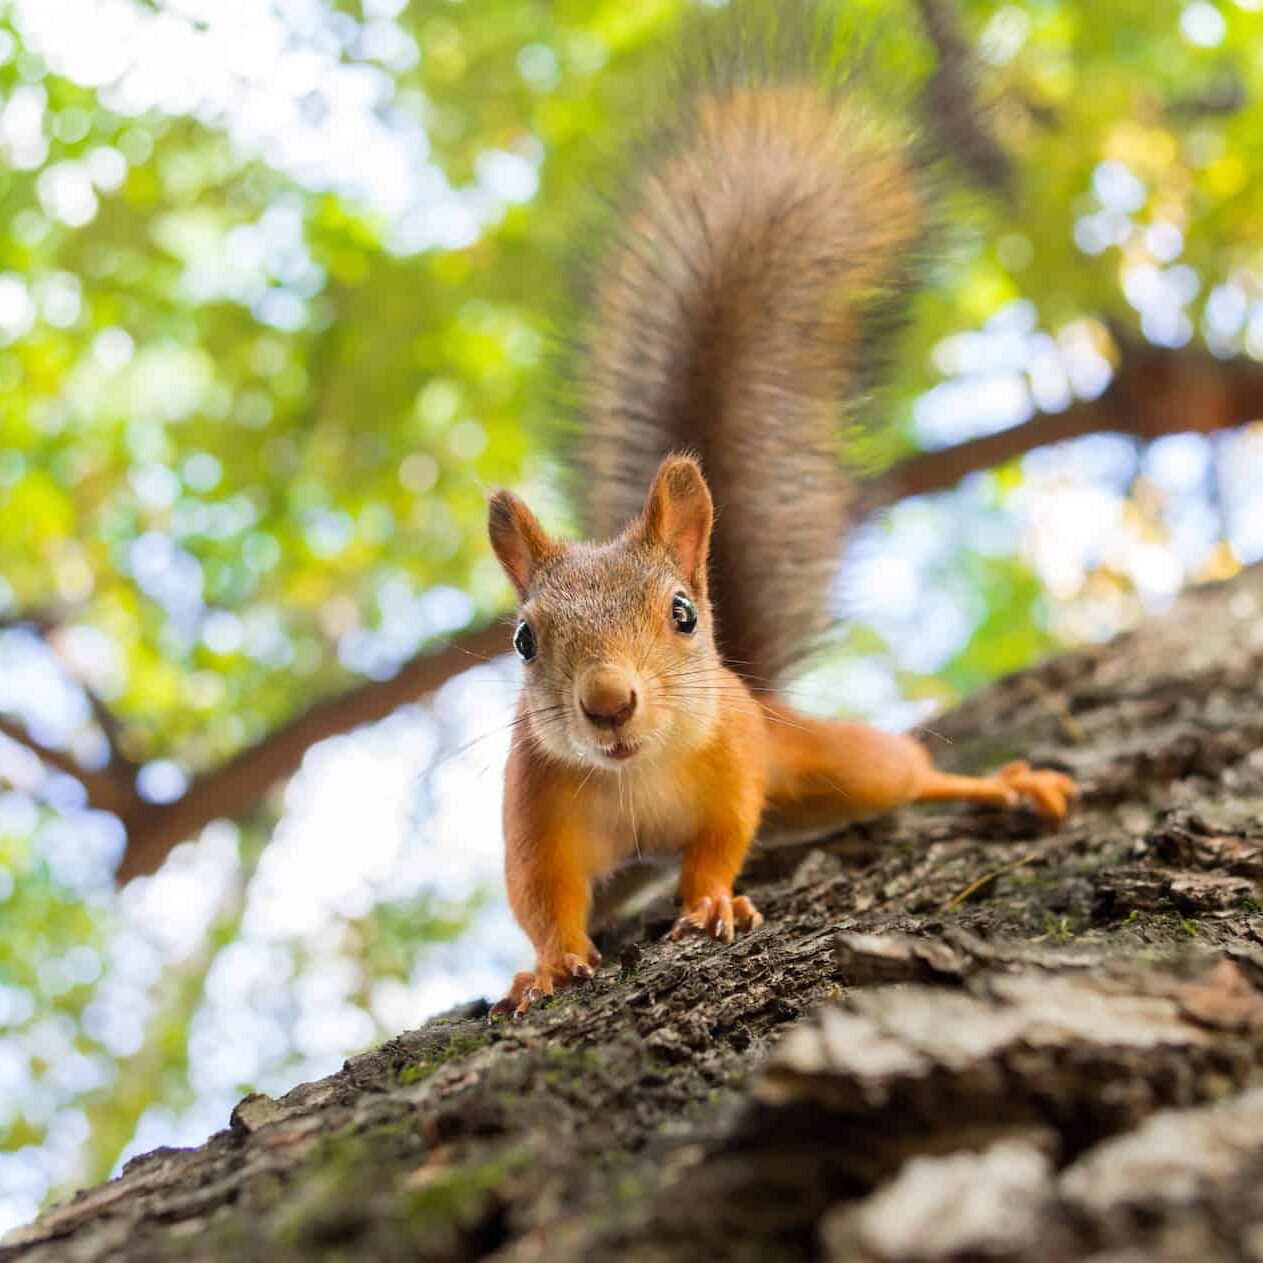 Squirrel control services chicago trees